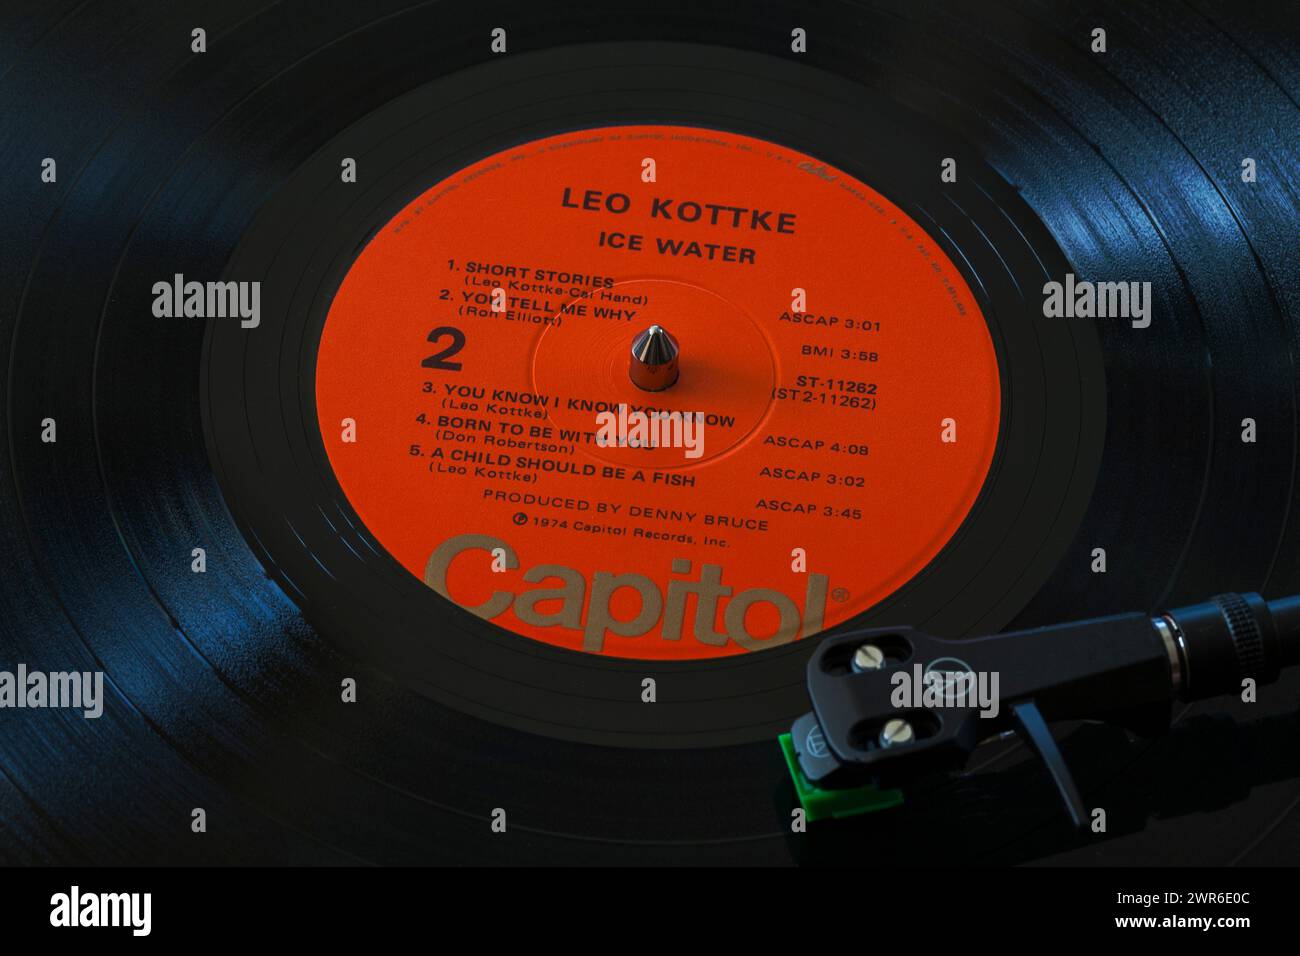 Leo Kottke Ice Water vinyl record album LP with tonearm, cartridge, headshell and stylus on turntable record player - 1974 Stock Photo